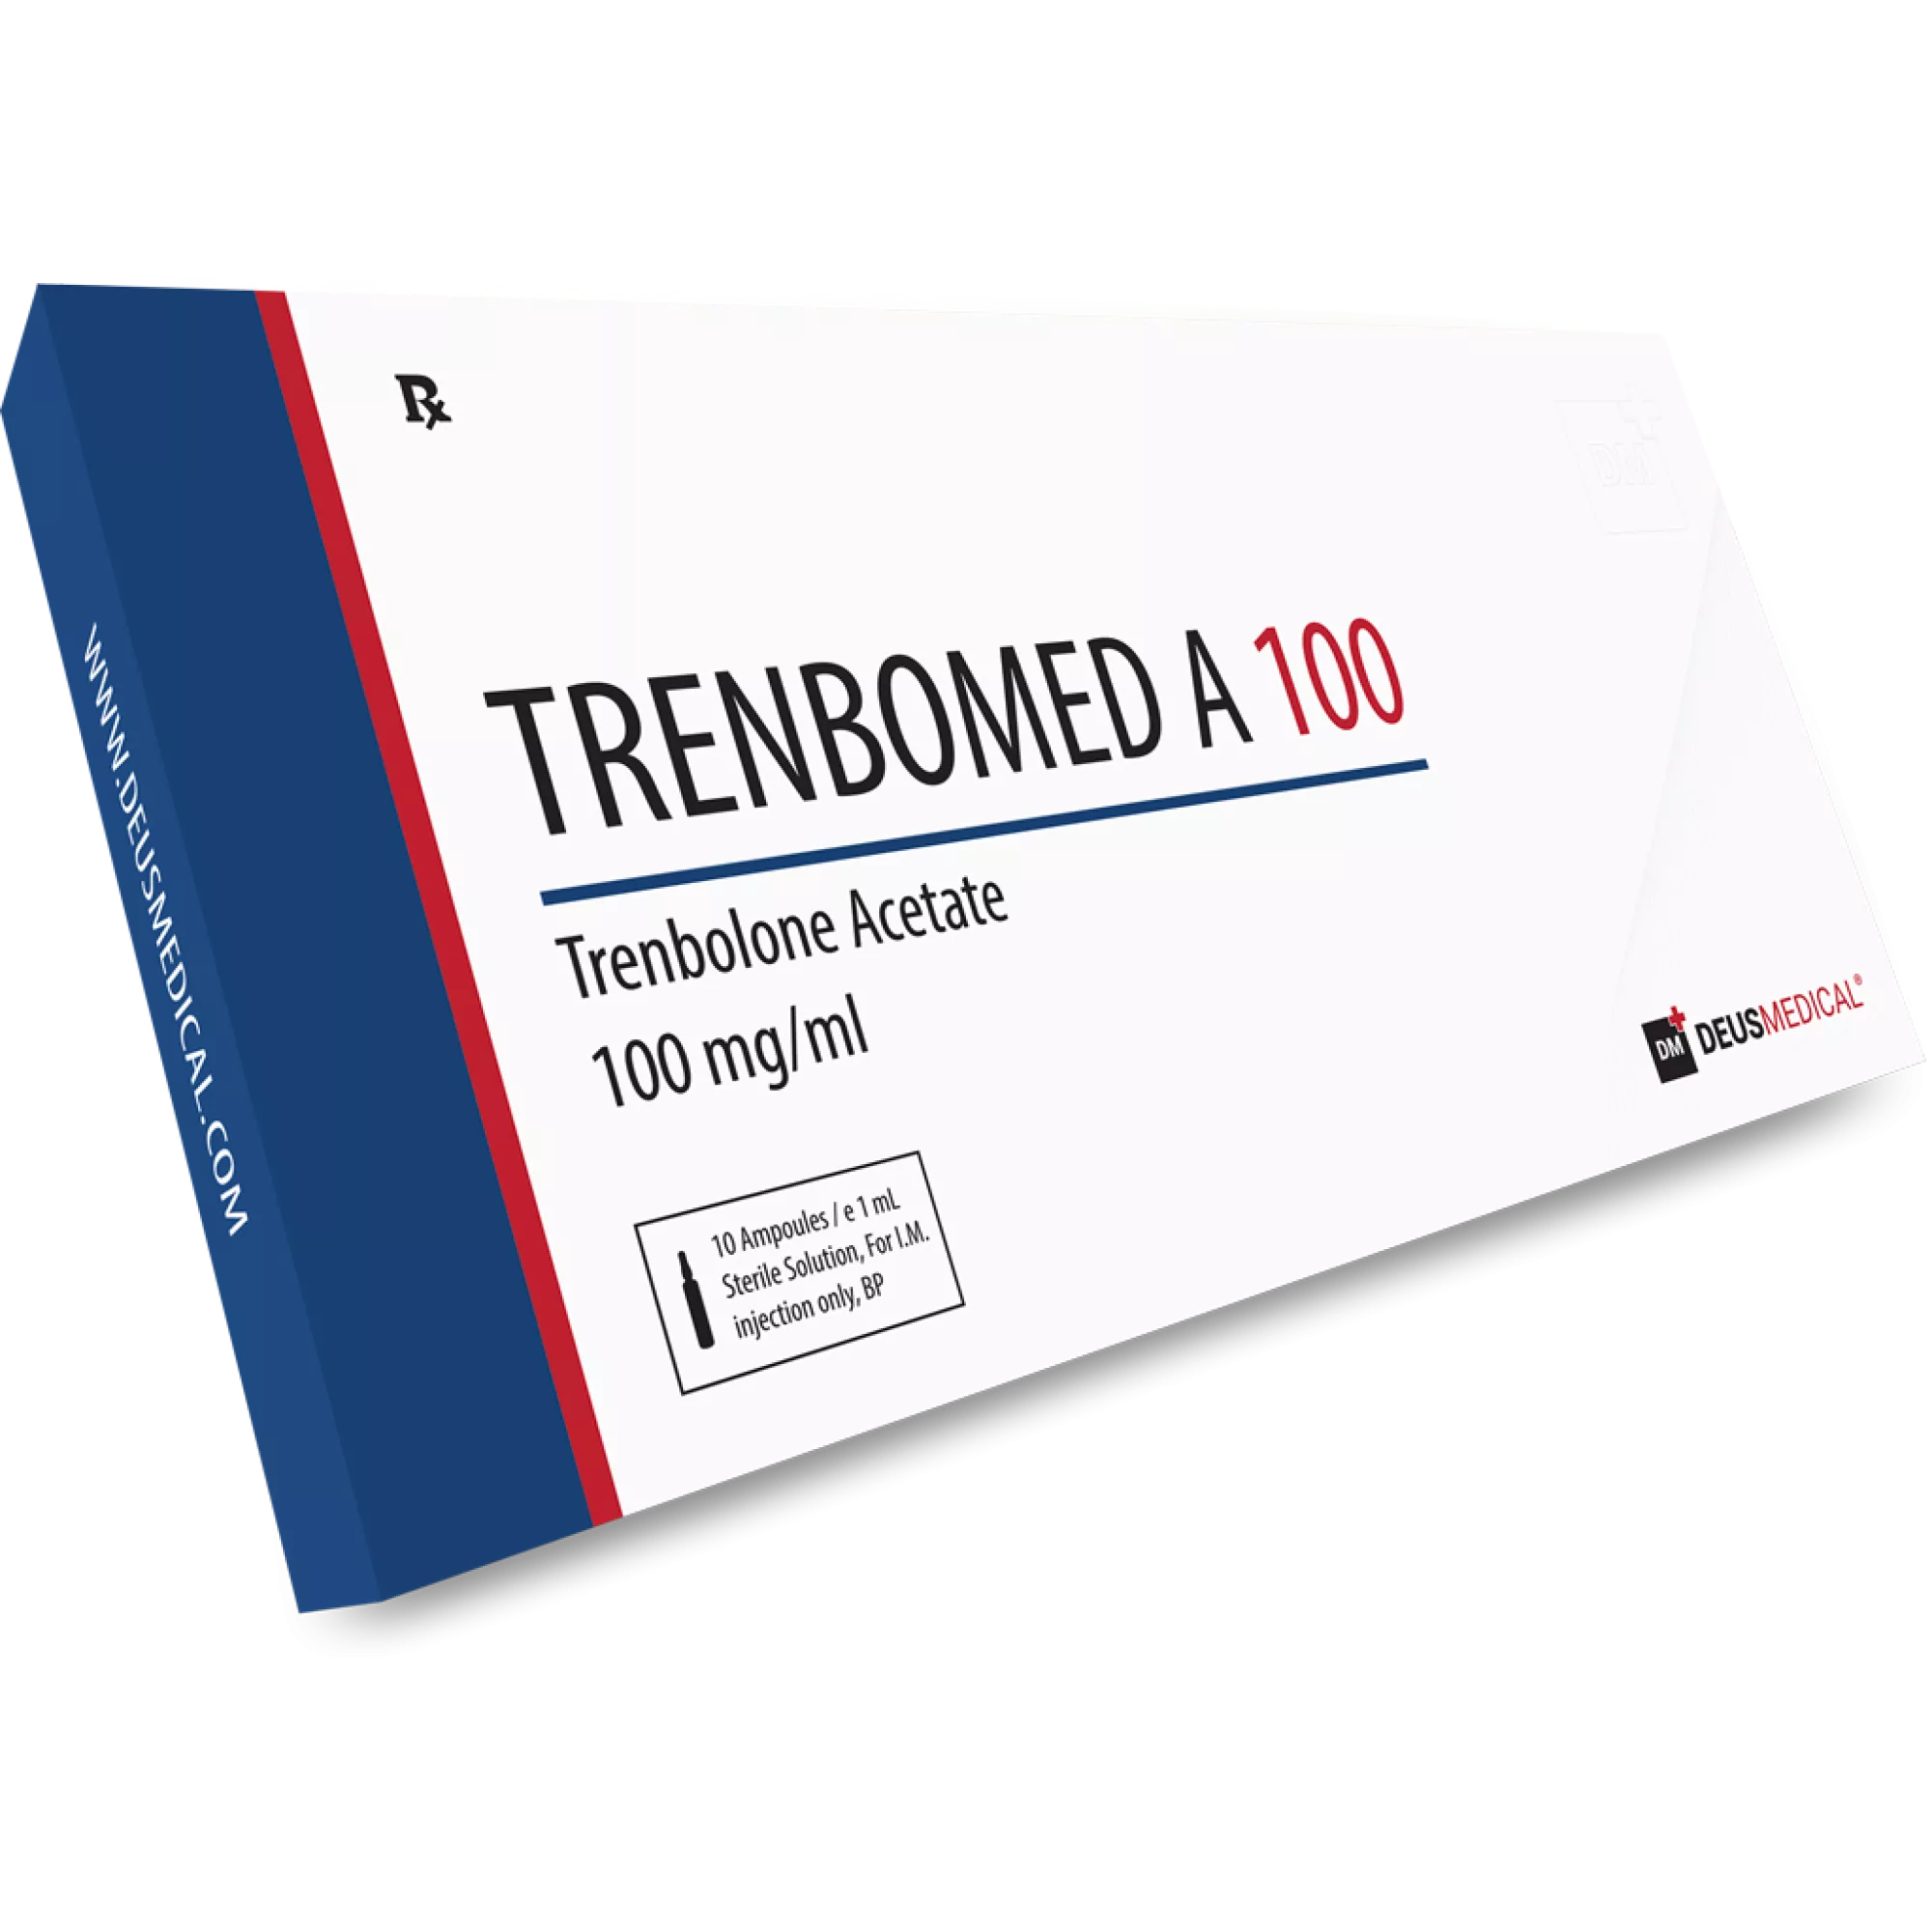 TRENBOMED A 100 (Trenbolone Acetate), Deus Medical, Buy Steroids Online - www.deuspower.shop